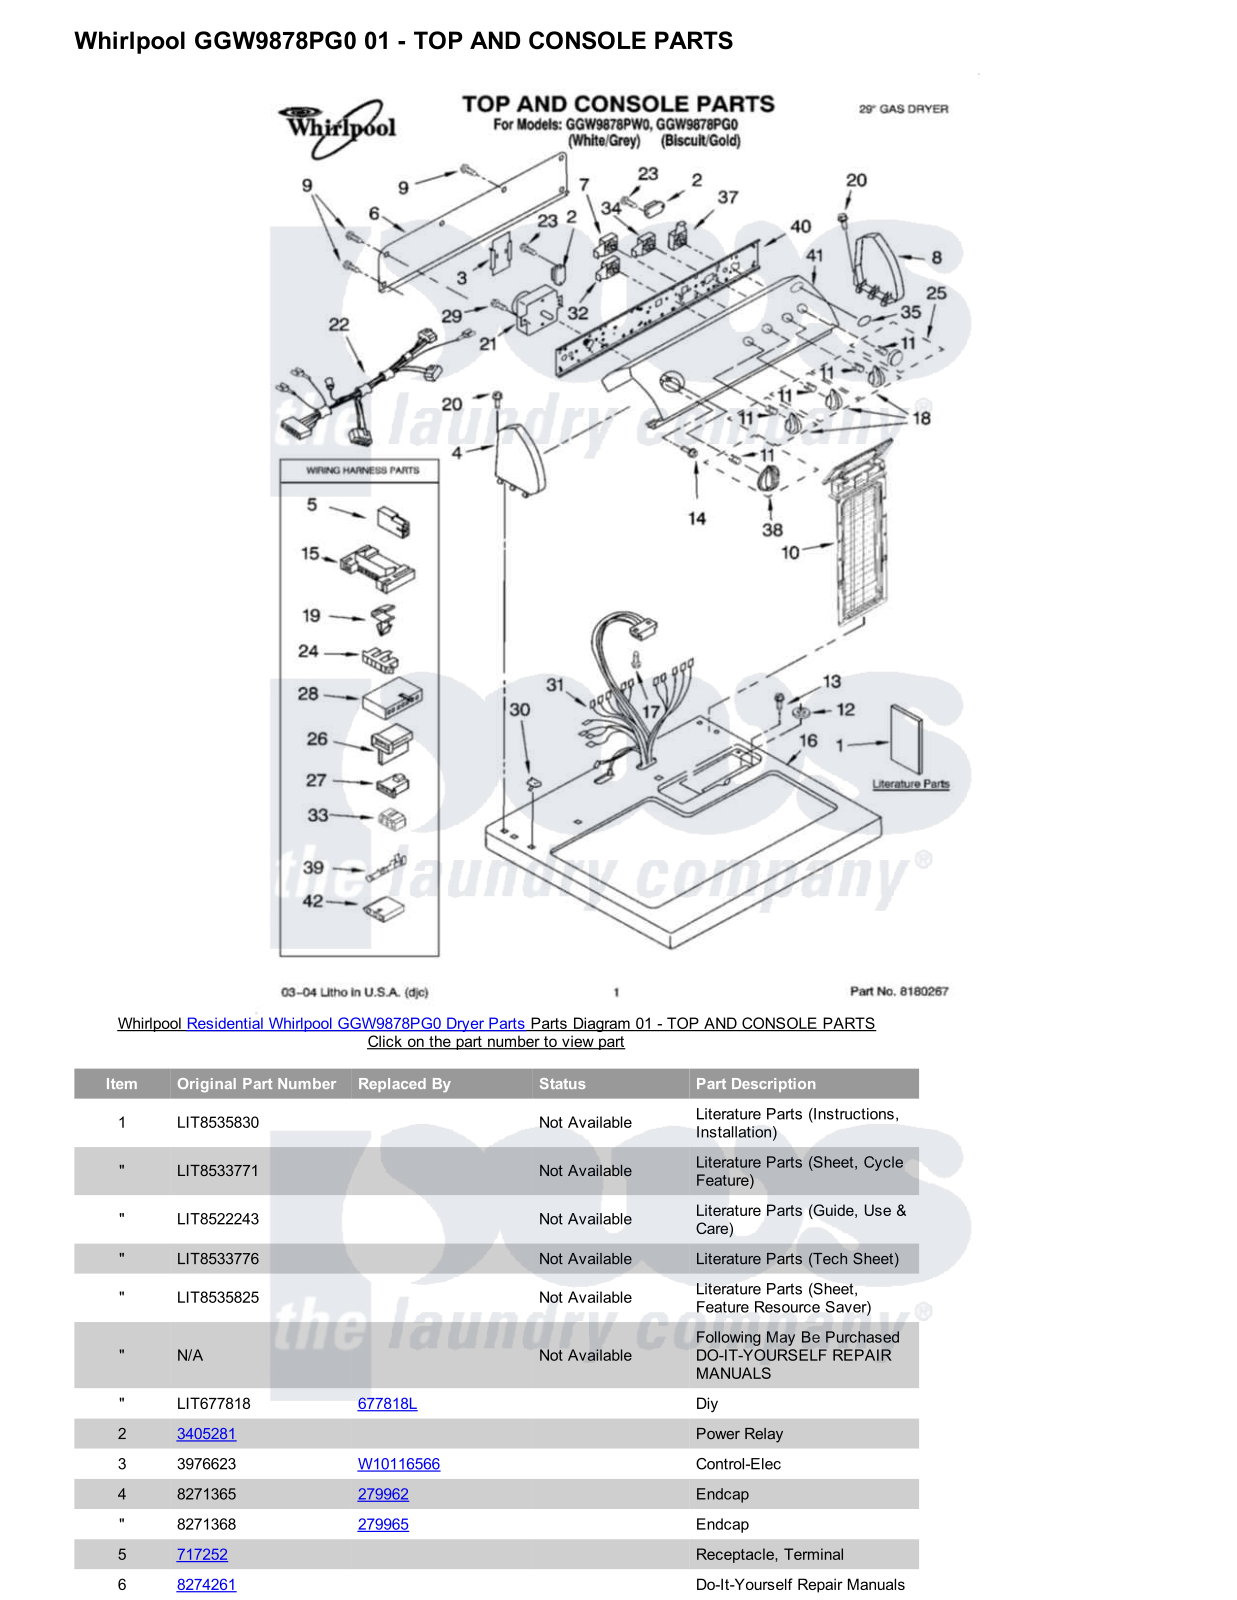 Whirlpool GGW9878PG0 Parts Diagram